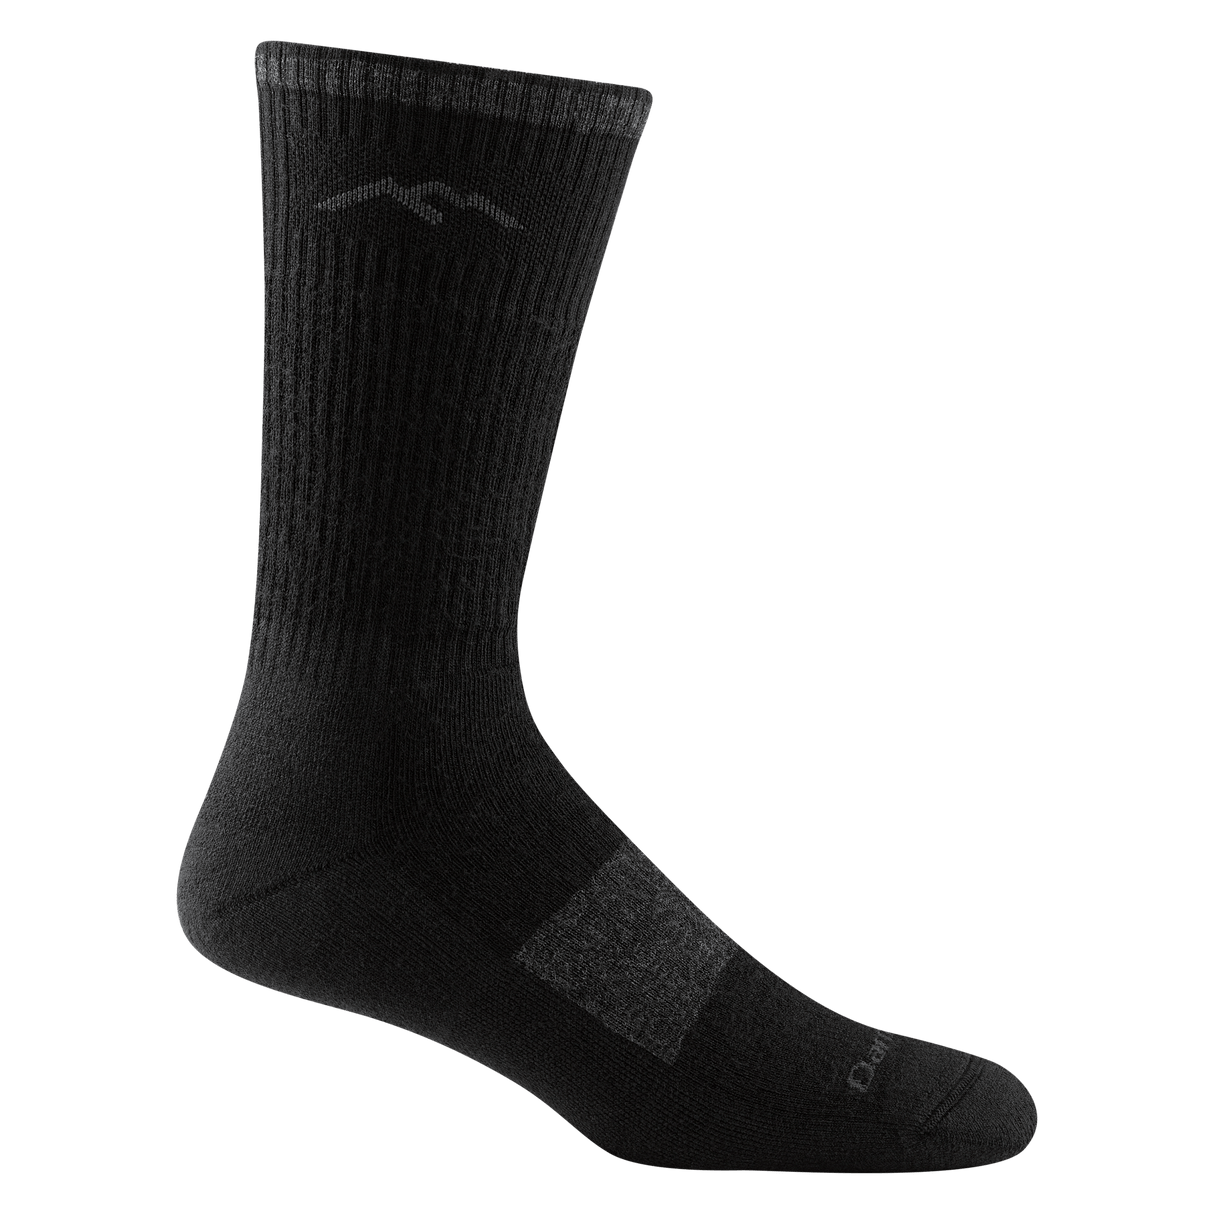 Darn Tough Mens Hiker Boot Full Cushion Midweight Socks  -  Medium / Onyx